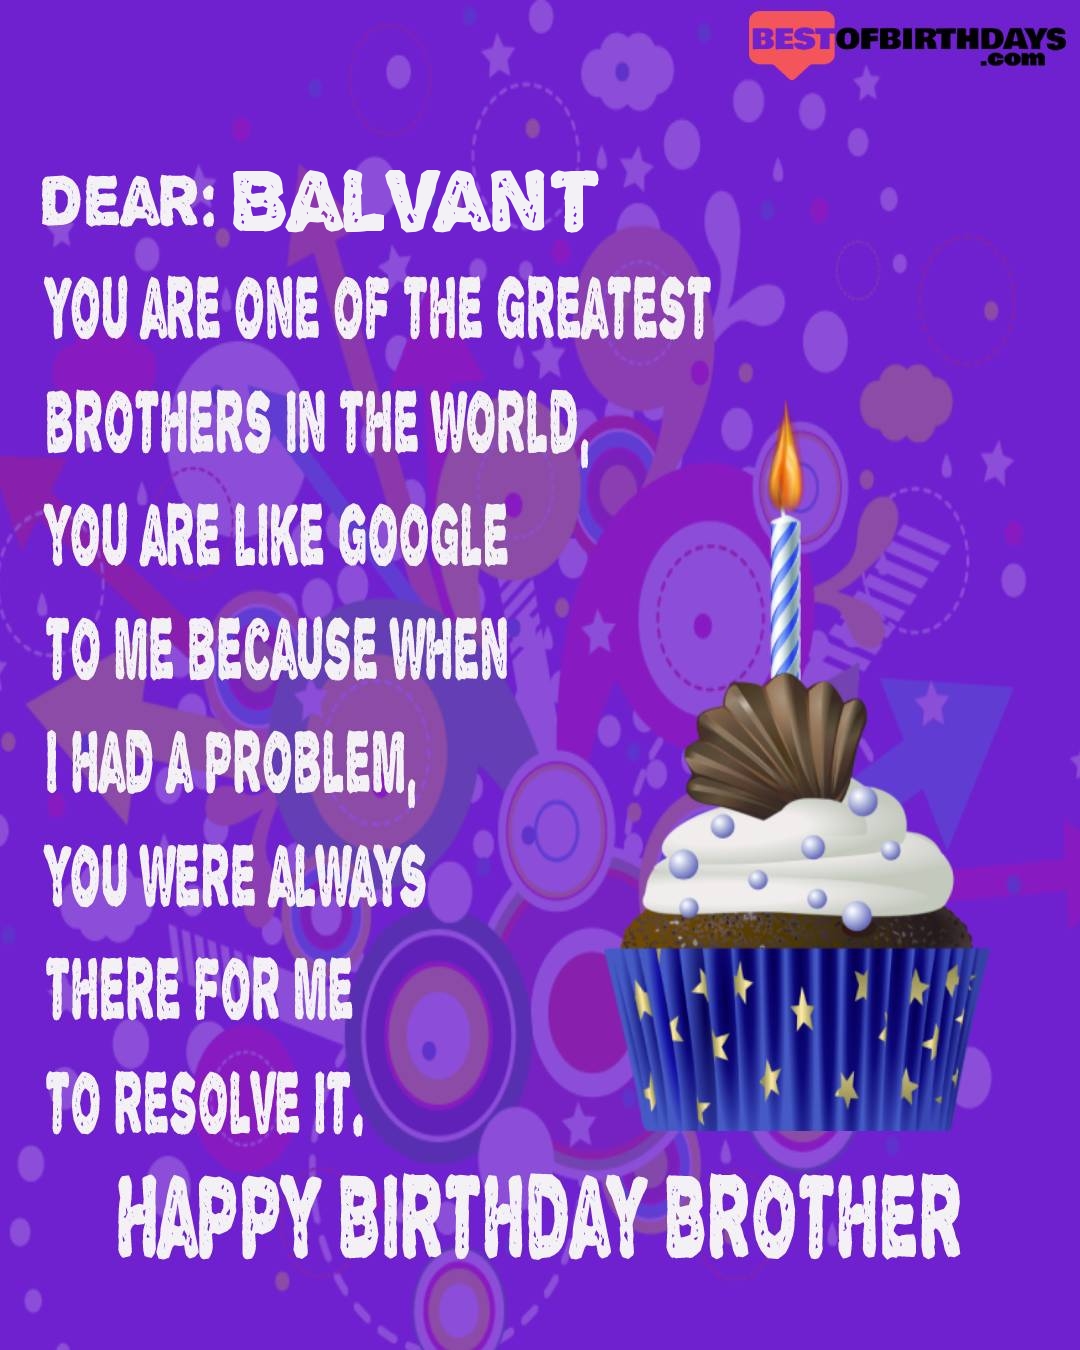 Happy birthday balvant bhai brother bro